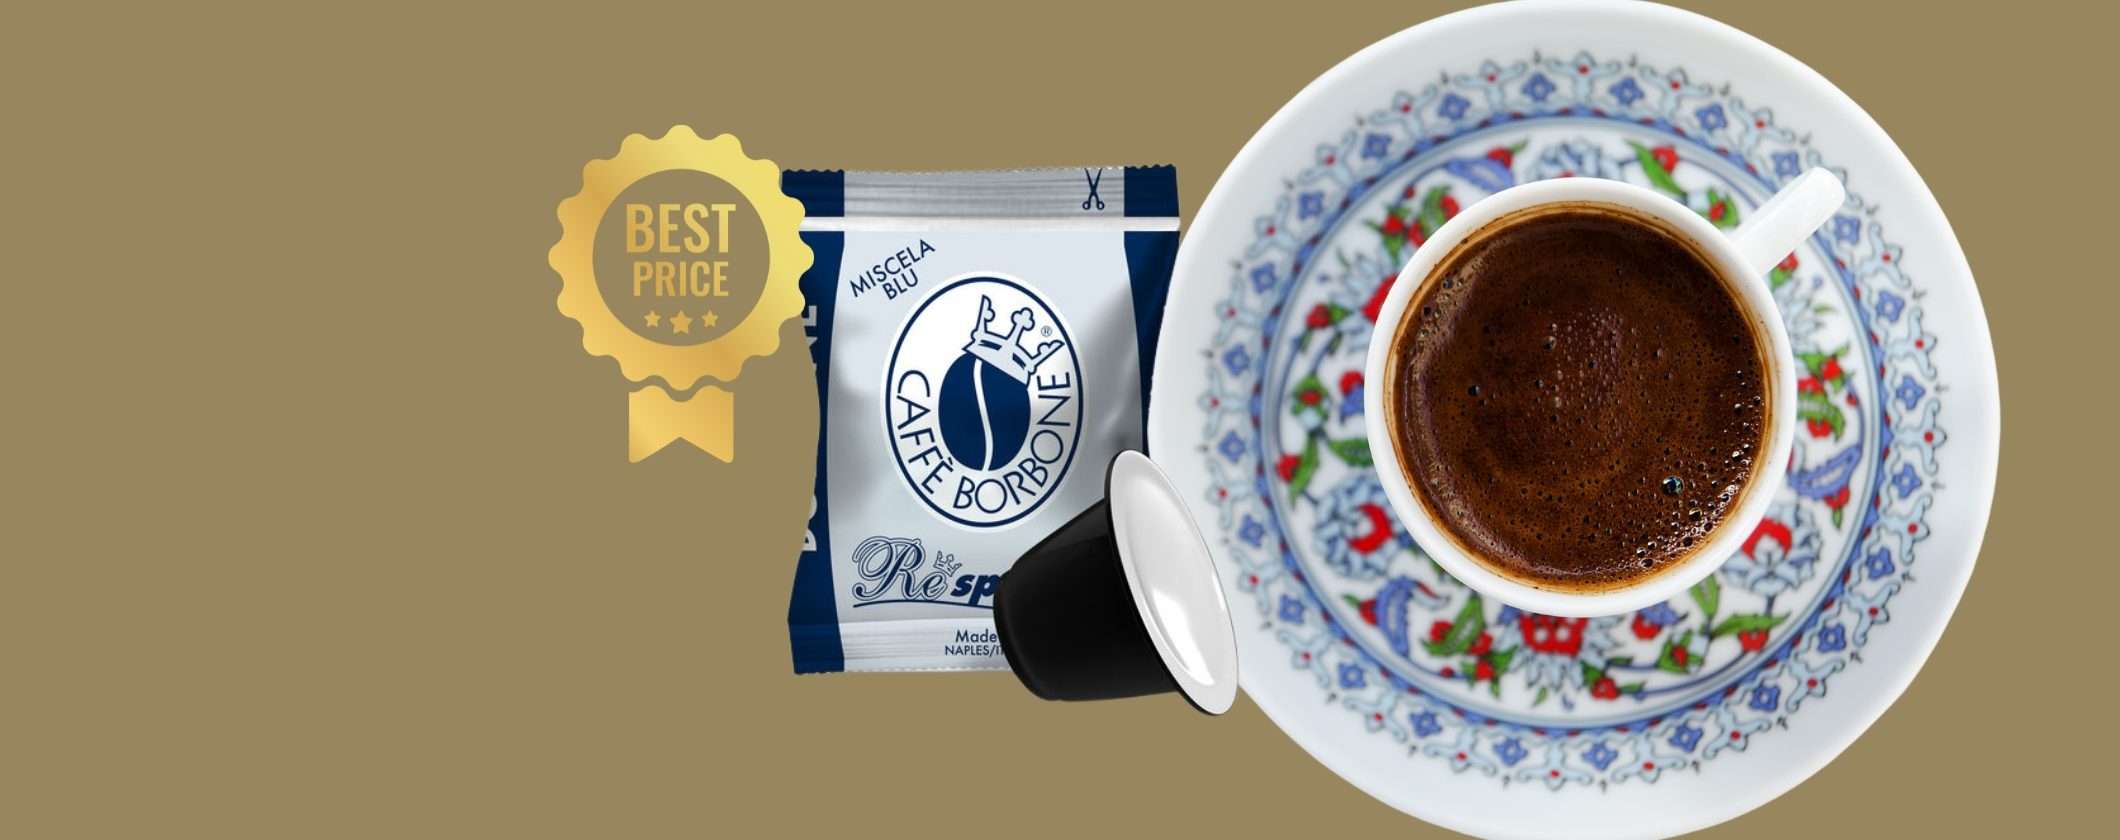 Capsule Caffè Borbone Nespresso: OFFERTA magnifica su eBay